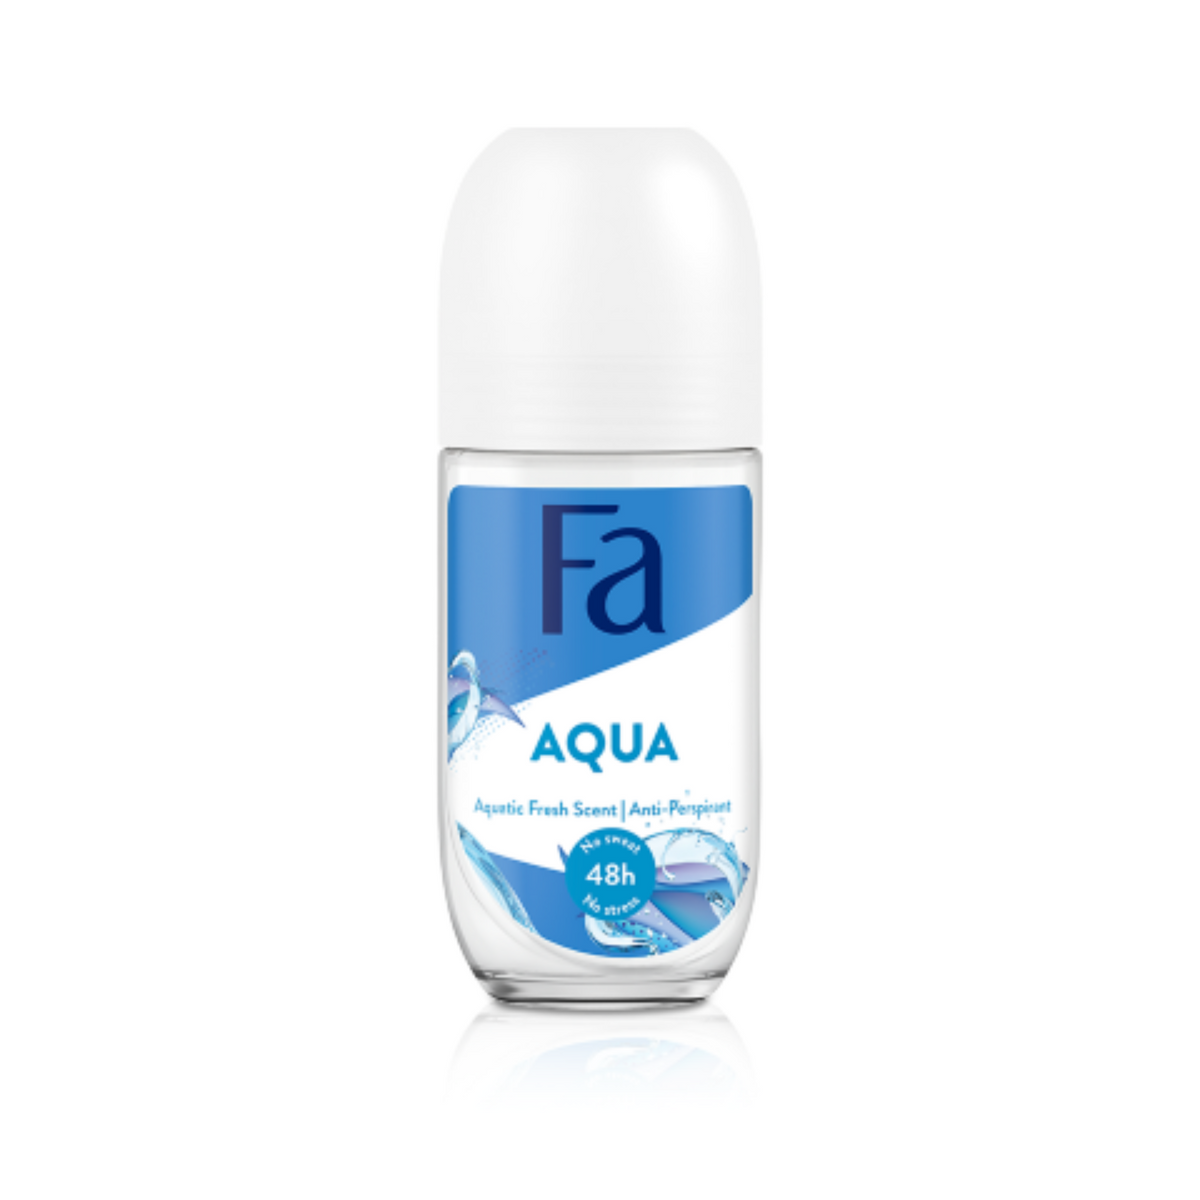 Primary Image of Aqua Roll On Antiperspirant